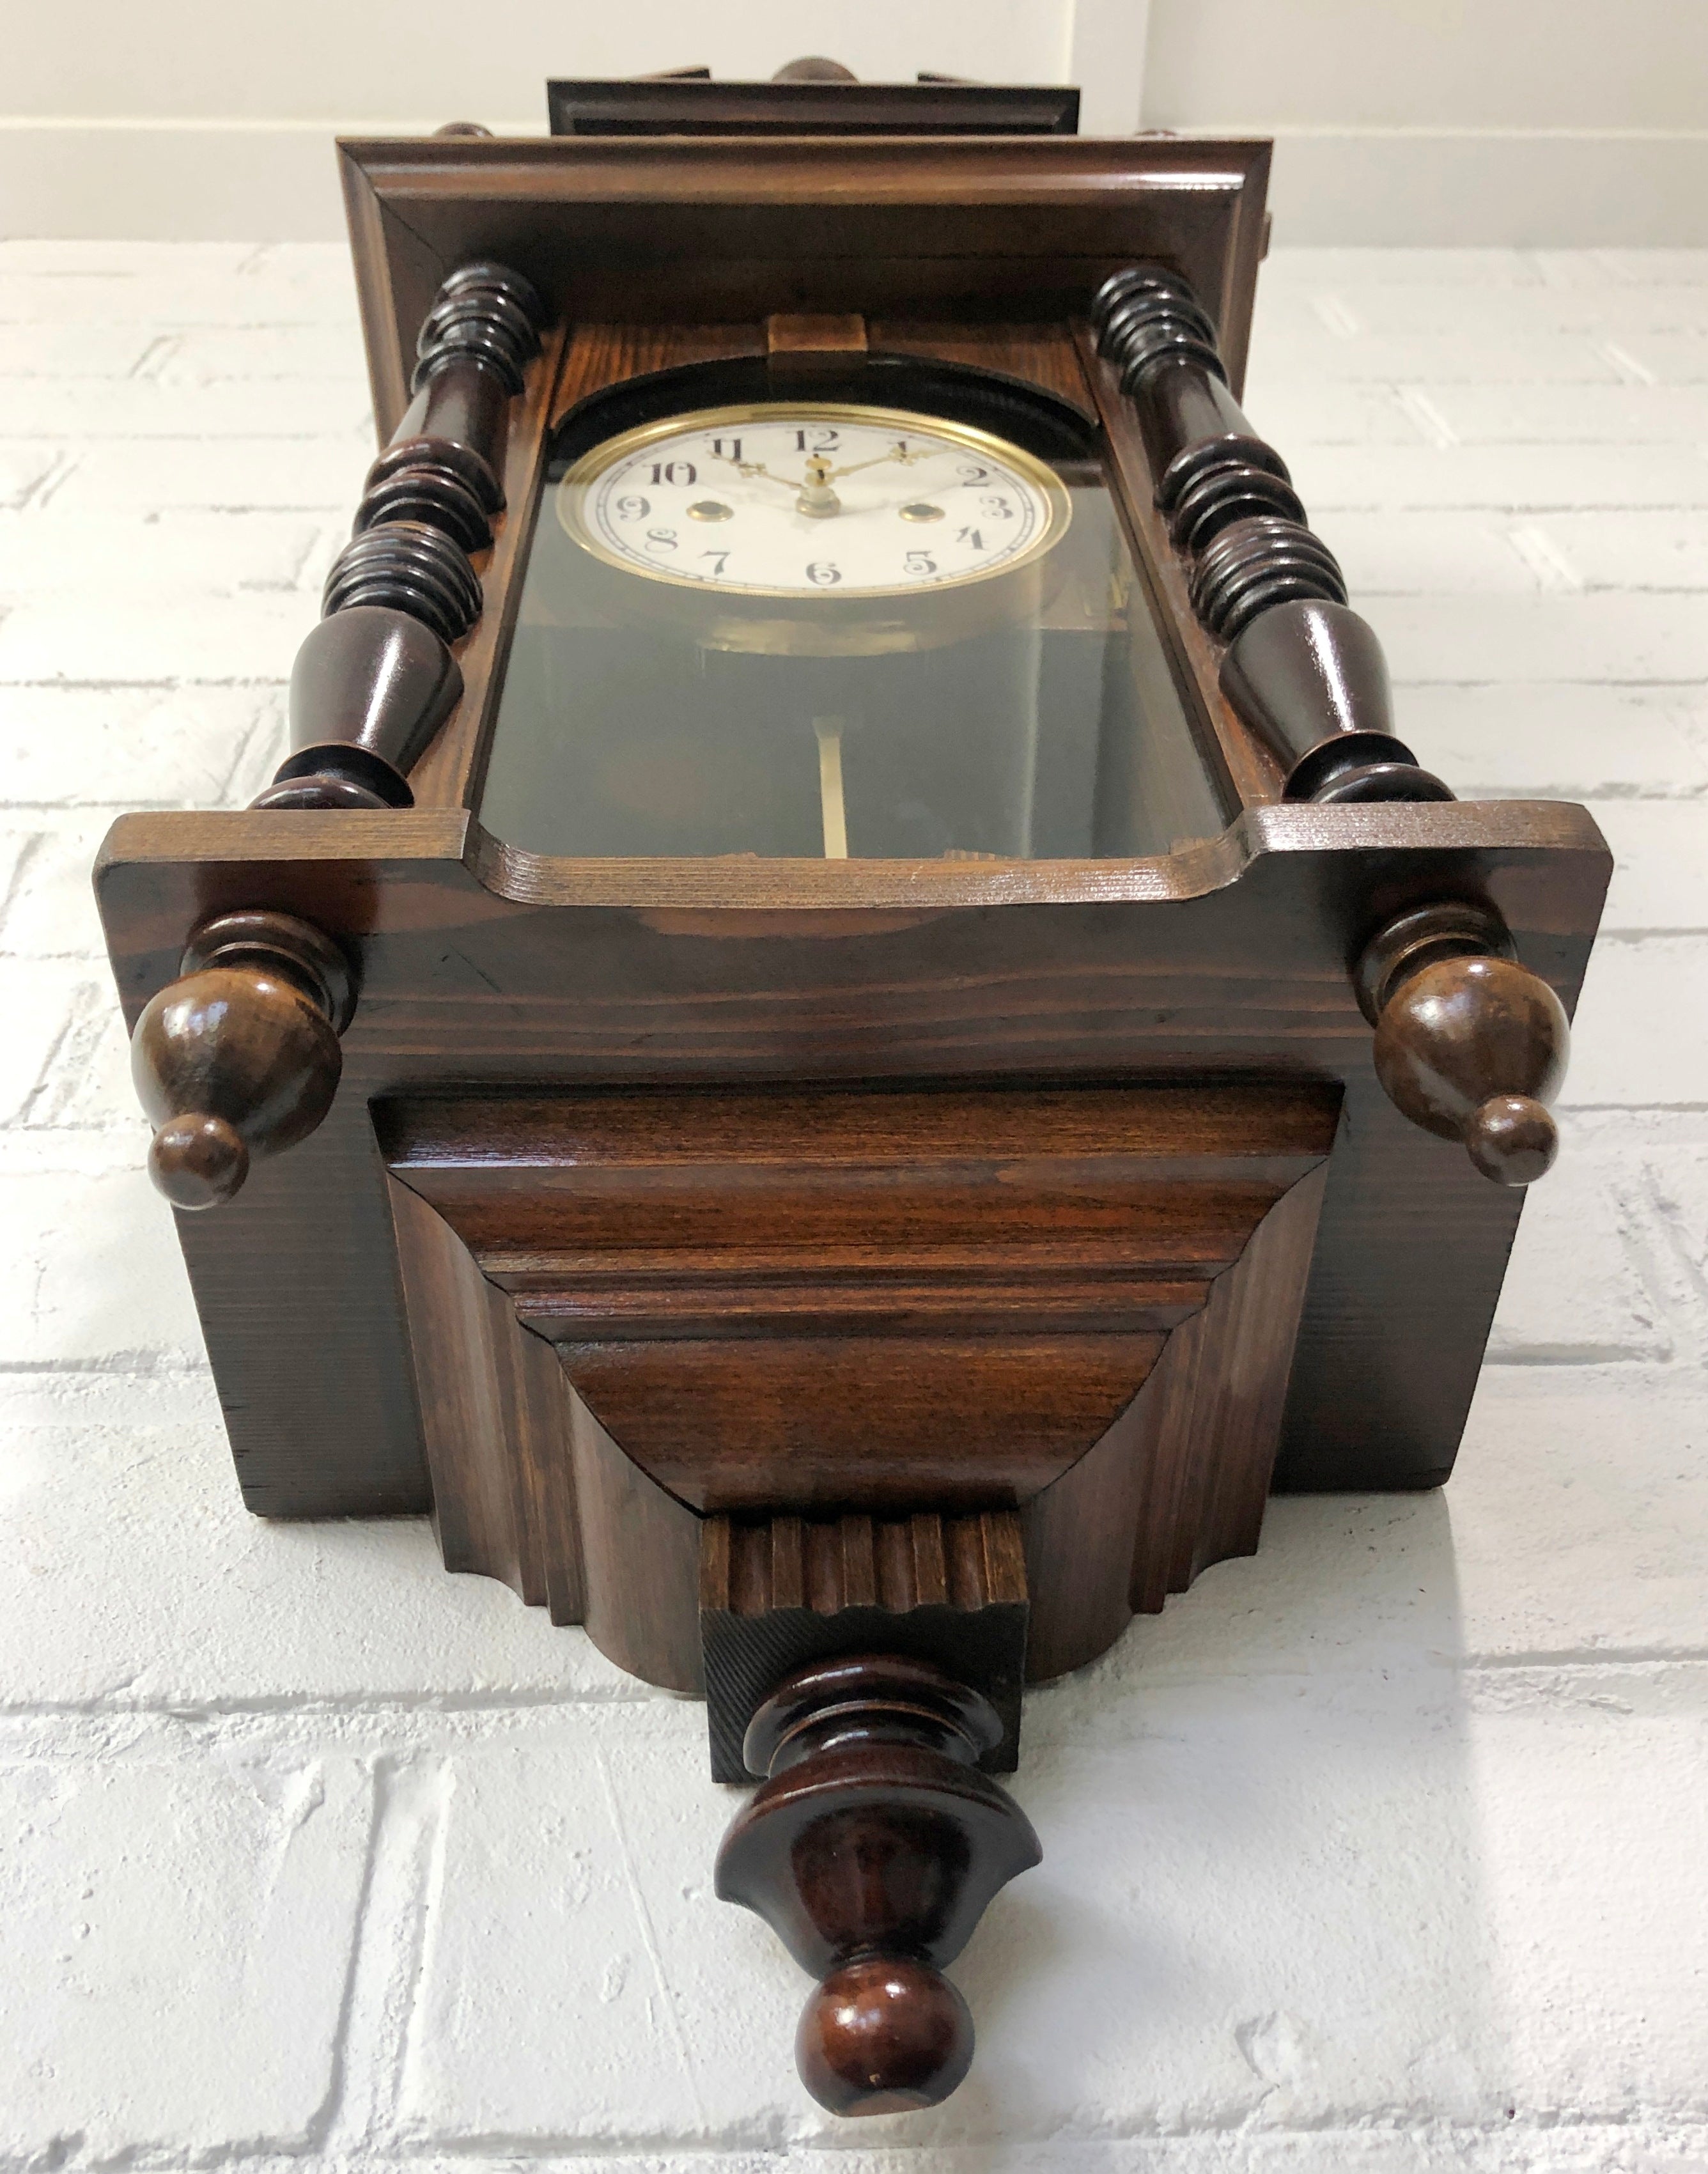 Original Antique HAC Musical Battery Wall Clock | eXibit collection